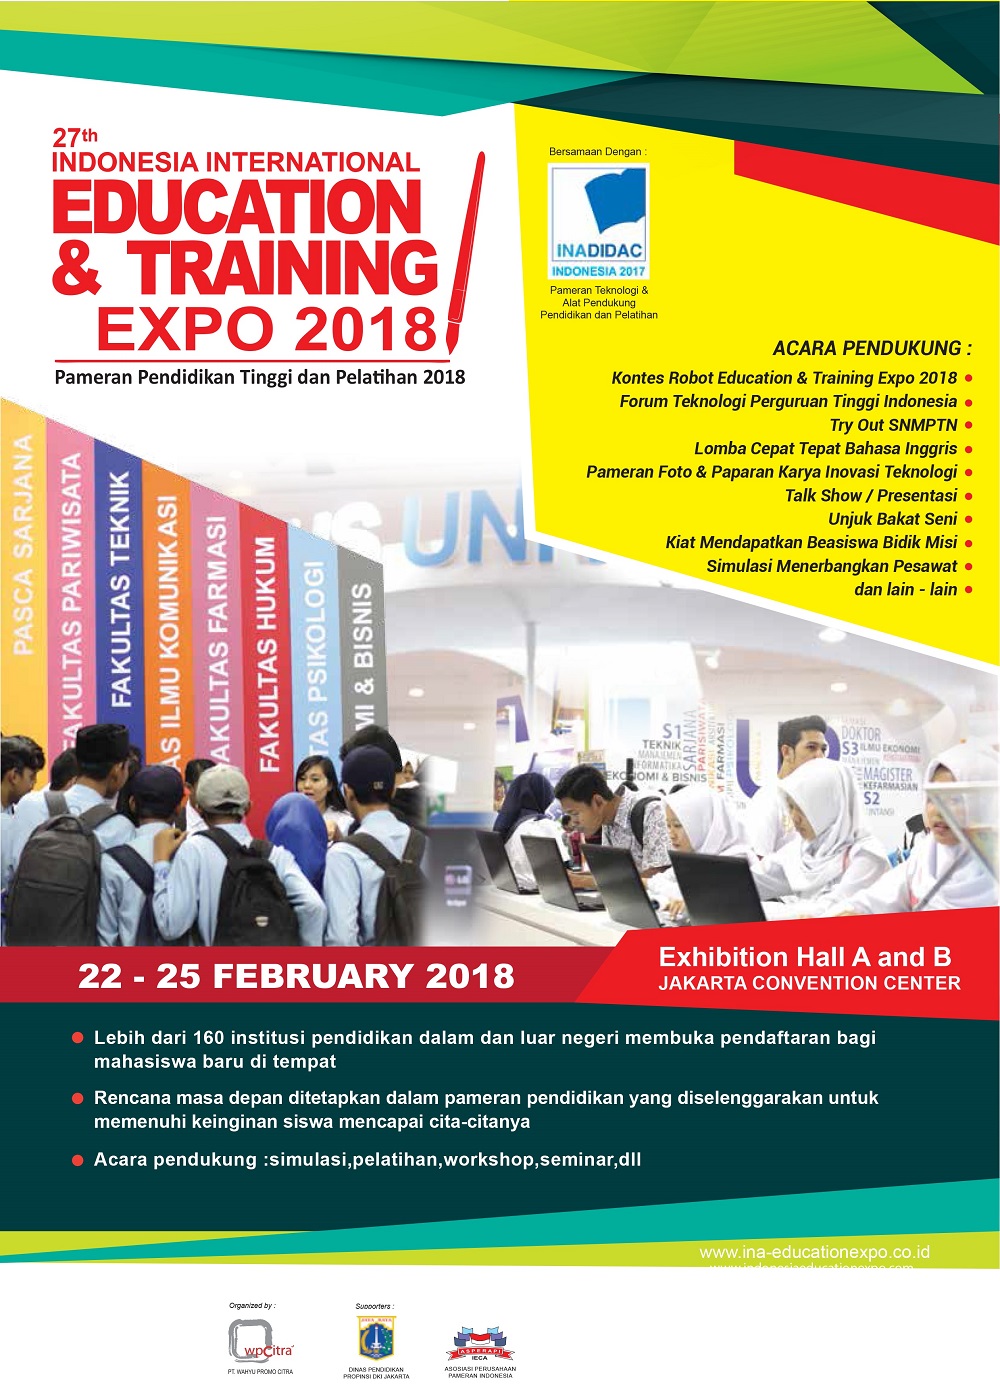 INDONESIA INTERNATIONAL EDUCATION & TRAINING EXPO (IIETE) 2018